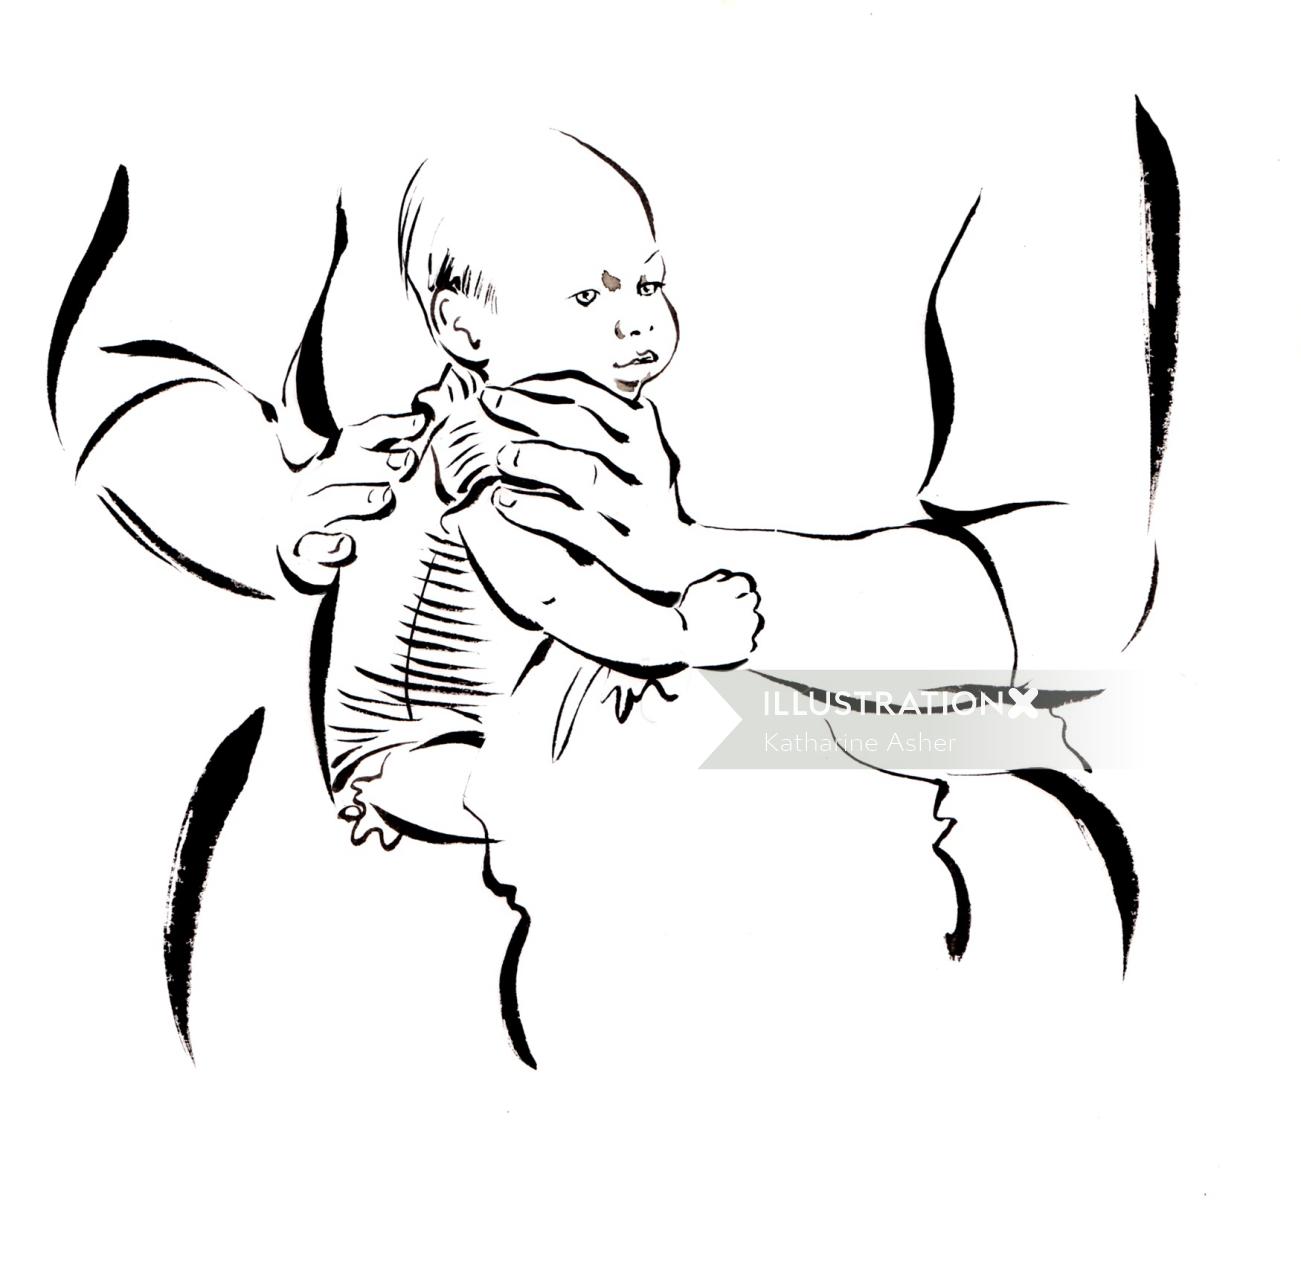 母亲抱着婴儿的插图，Katharine Asher